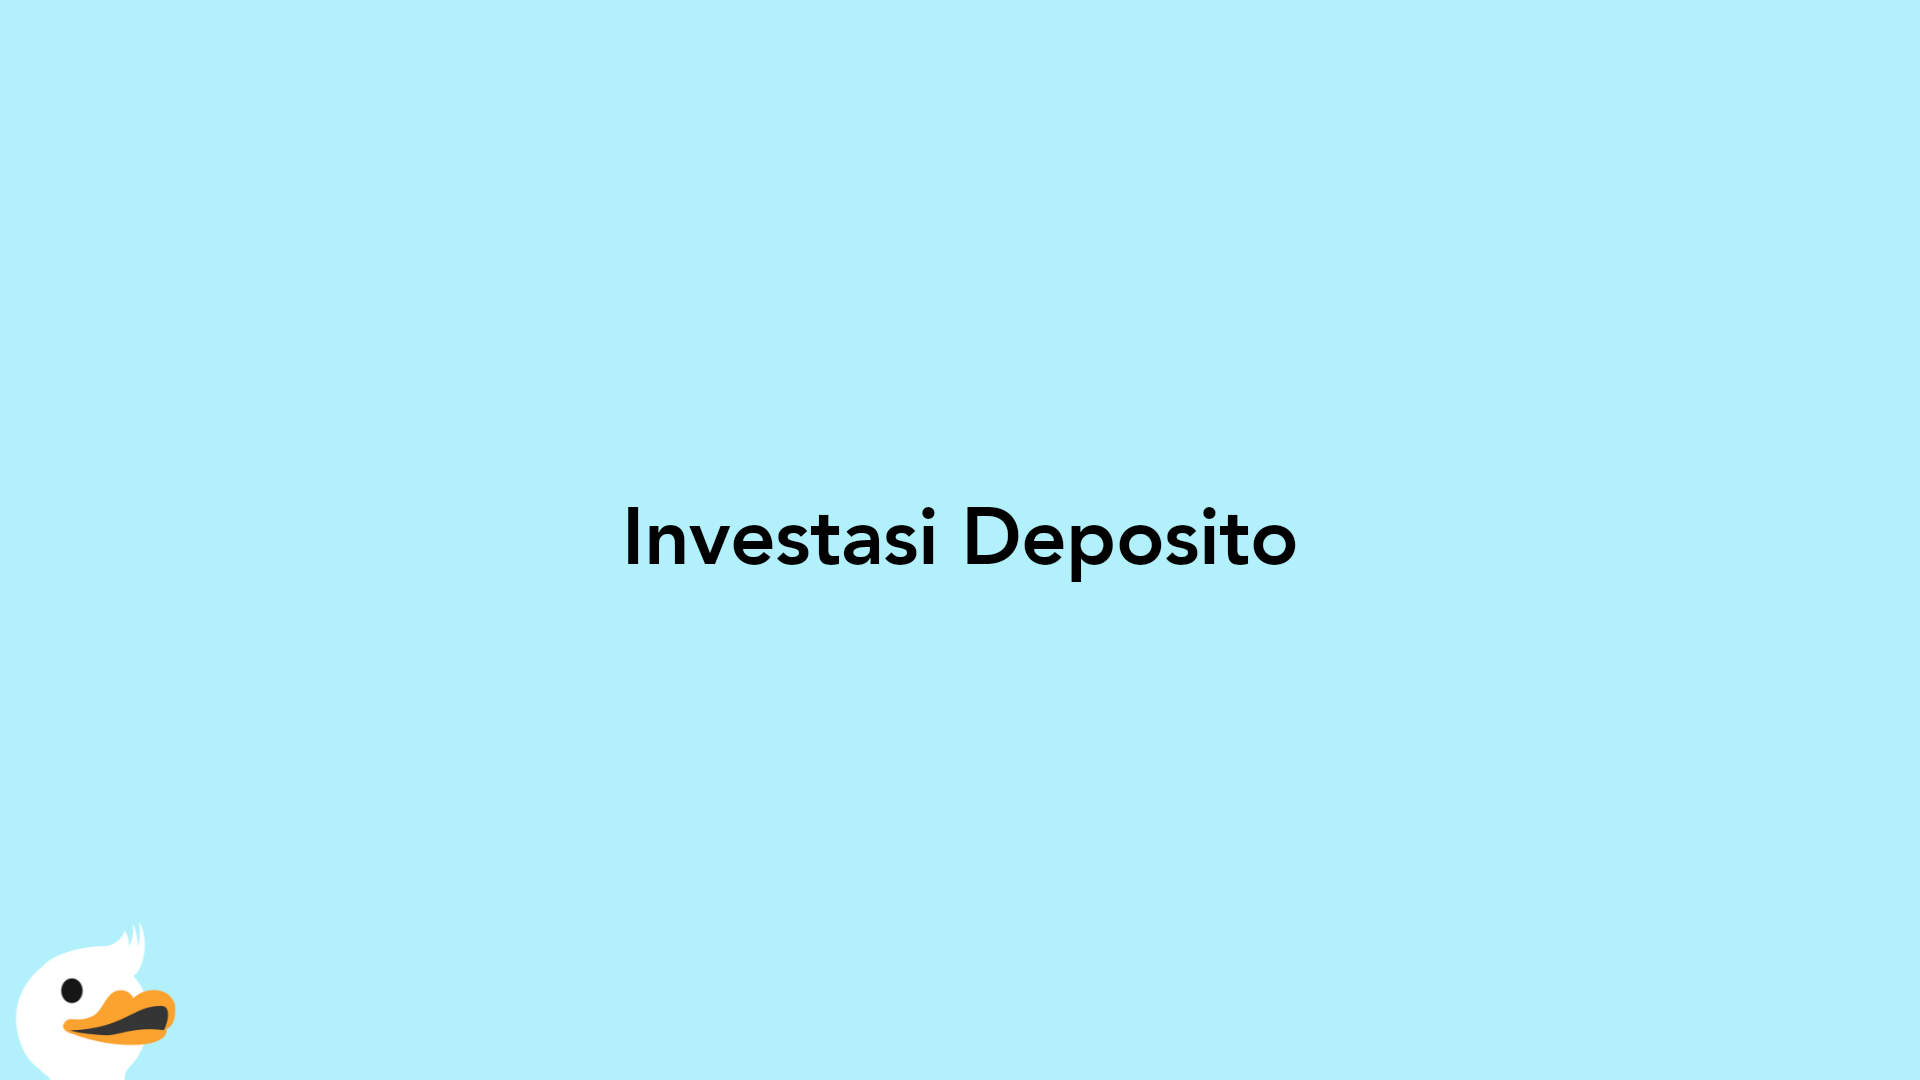 Investasi Deposito